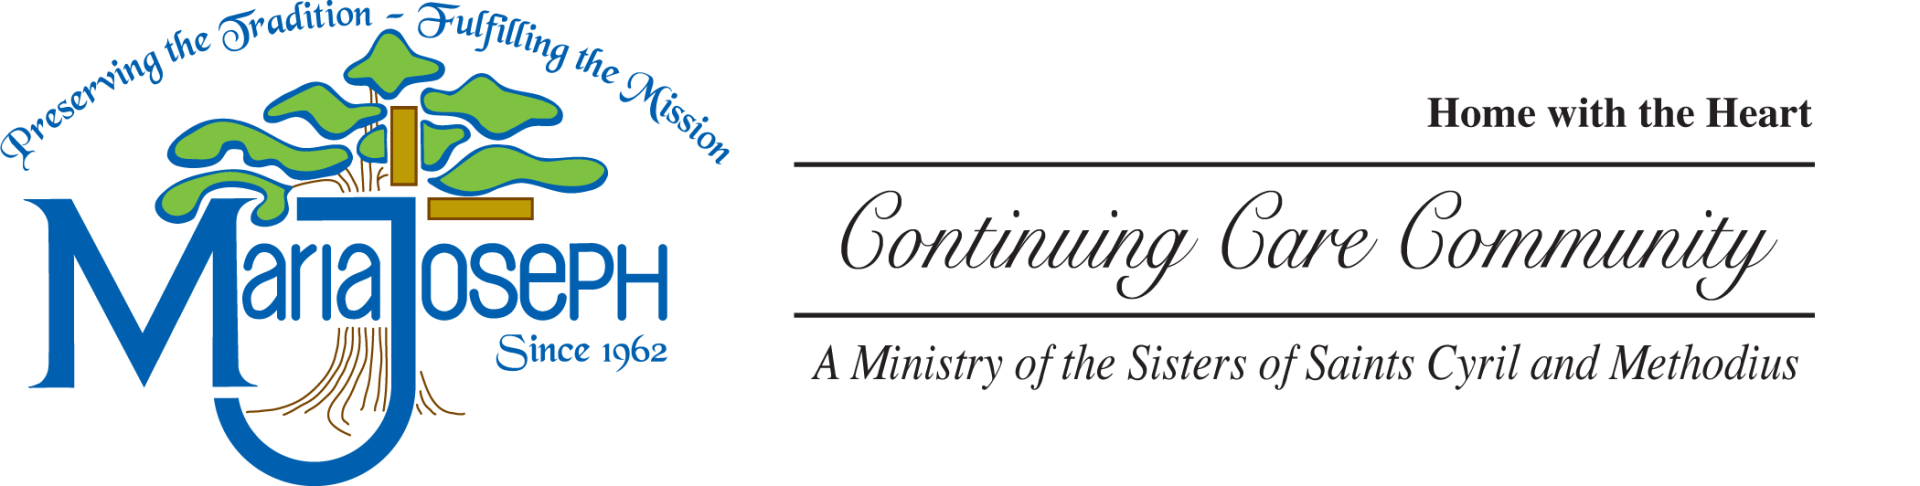 Maria Joseph Continuing Care Community logo